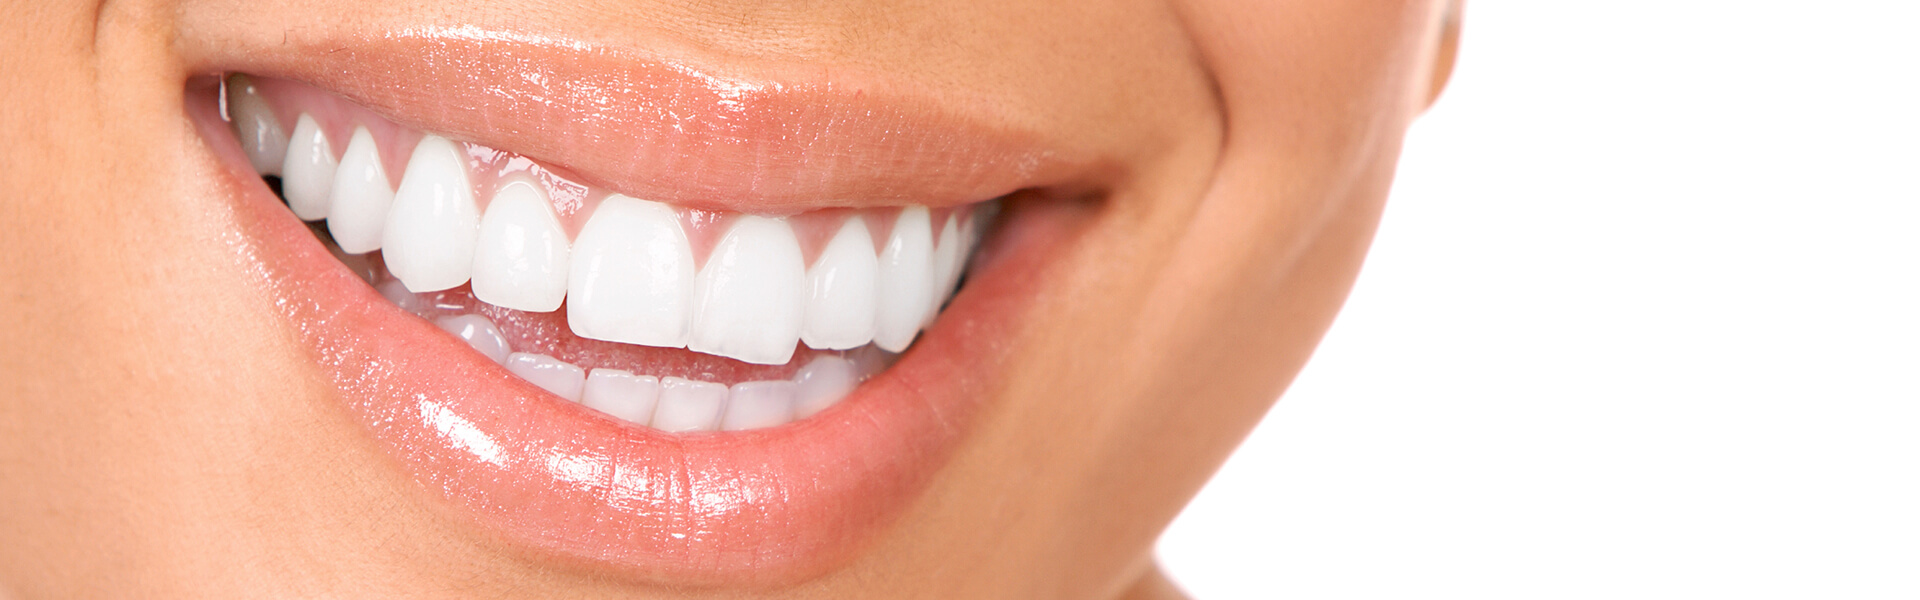 Dental Care of Morristown: Gum Disease - Progression, Cause & Treatment